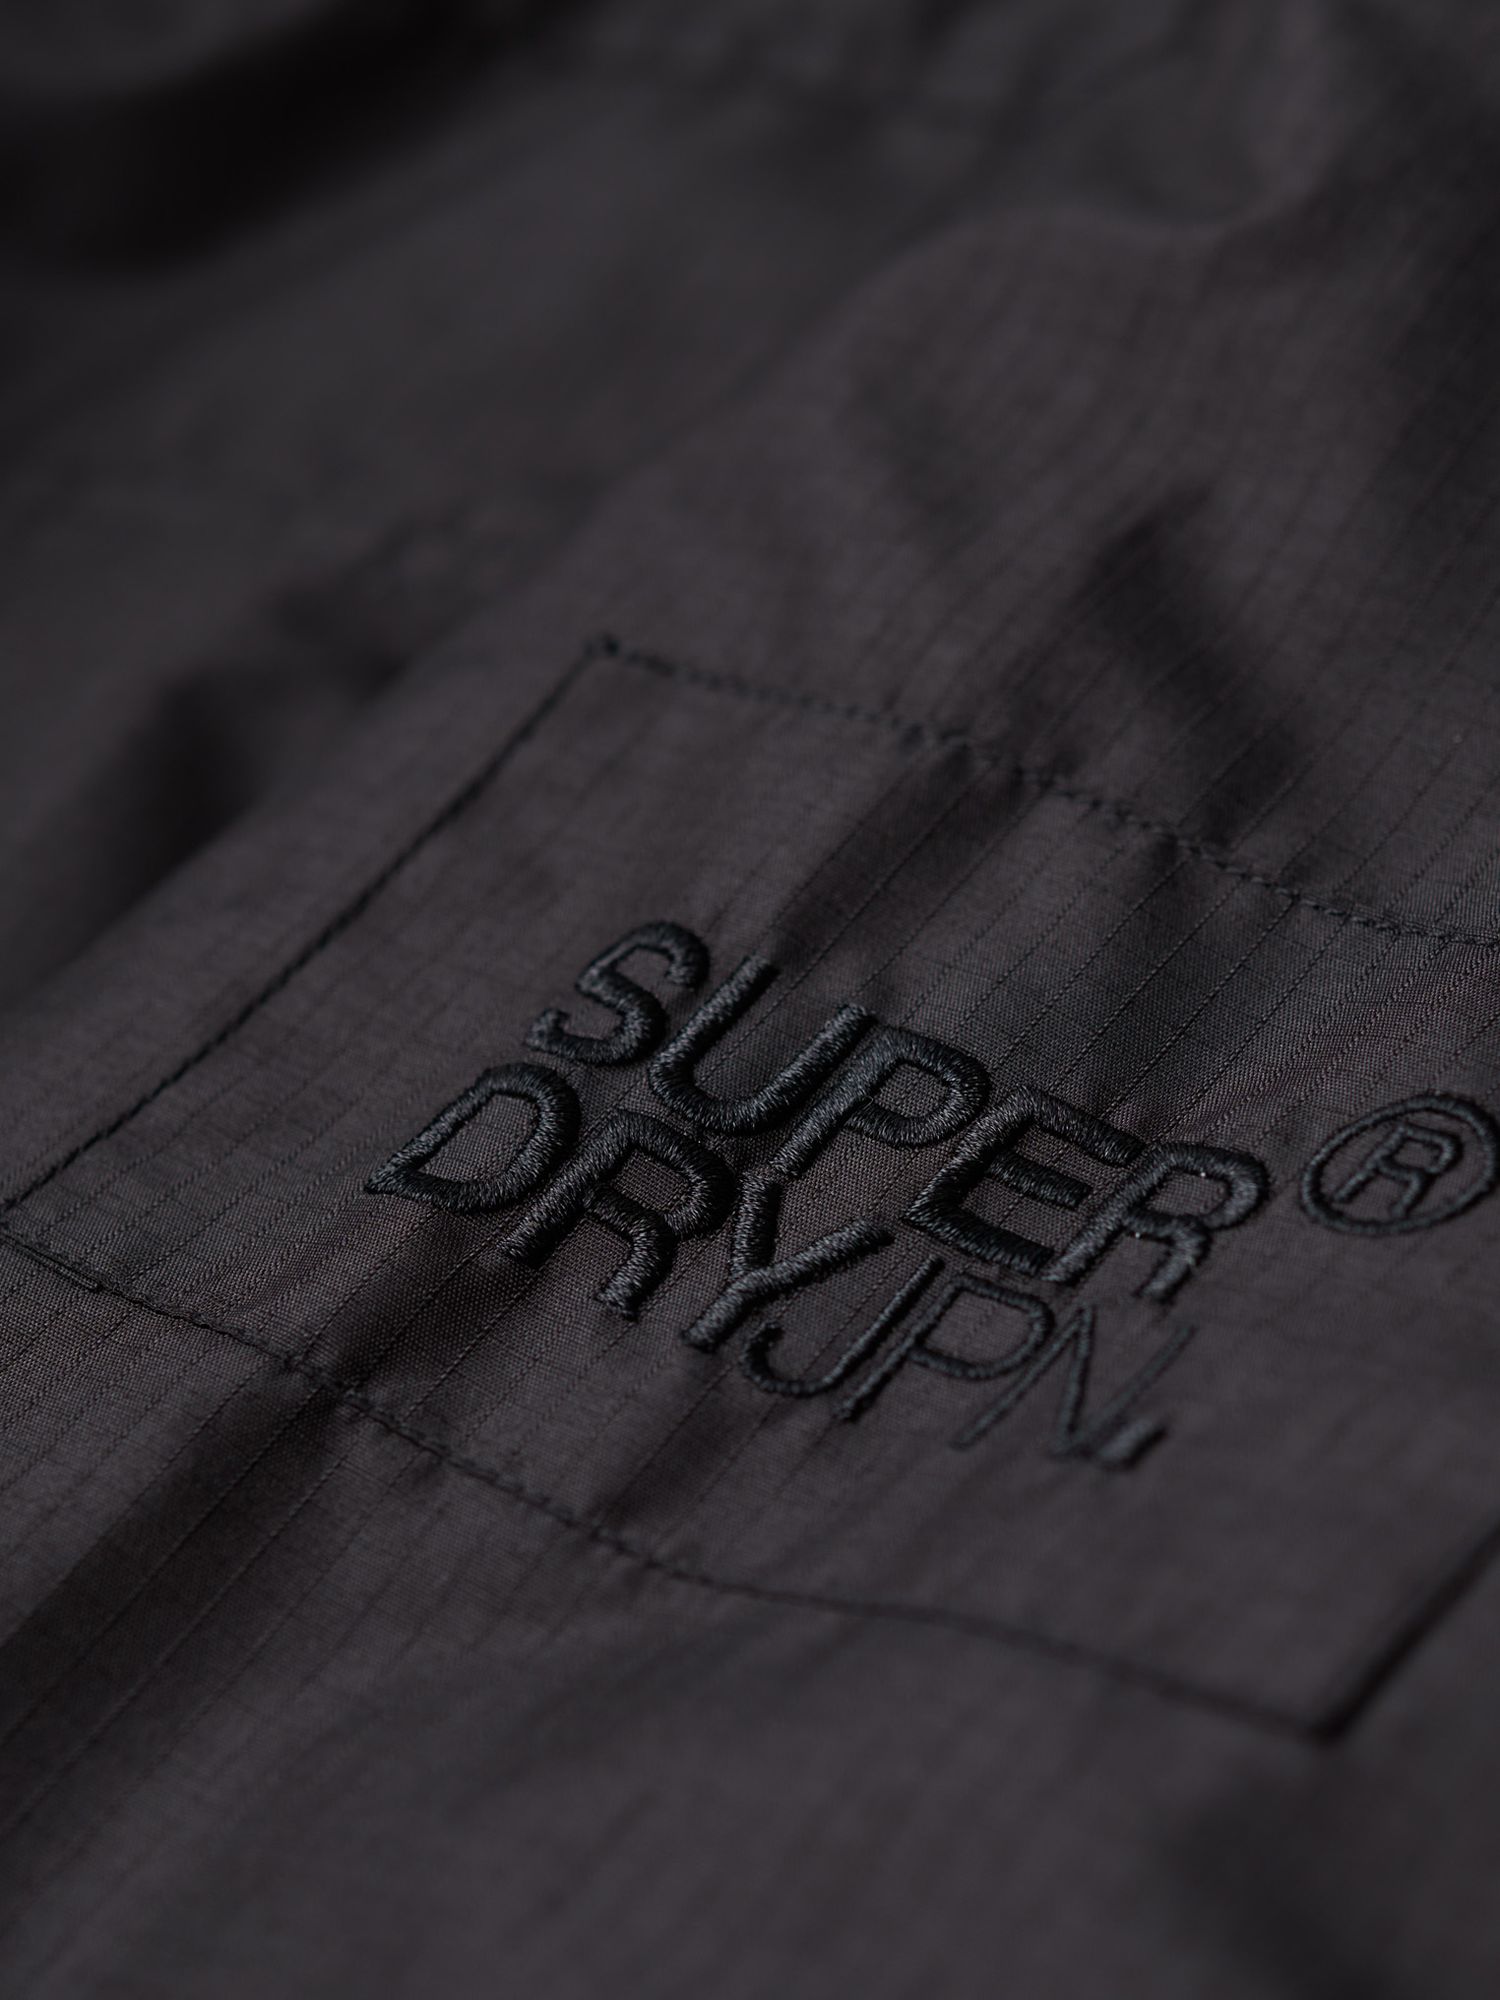 Superdry Mountain SD Windcheater Jacket, Black at John Lewis & Partners